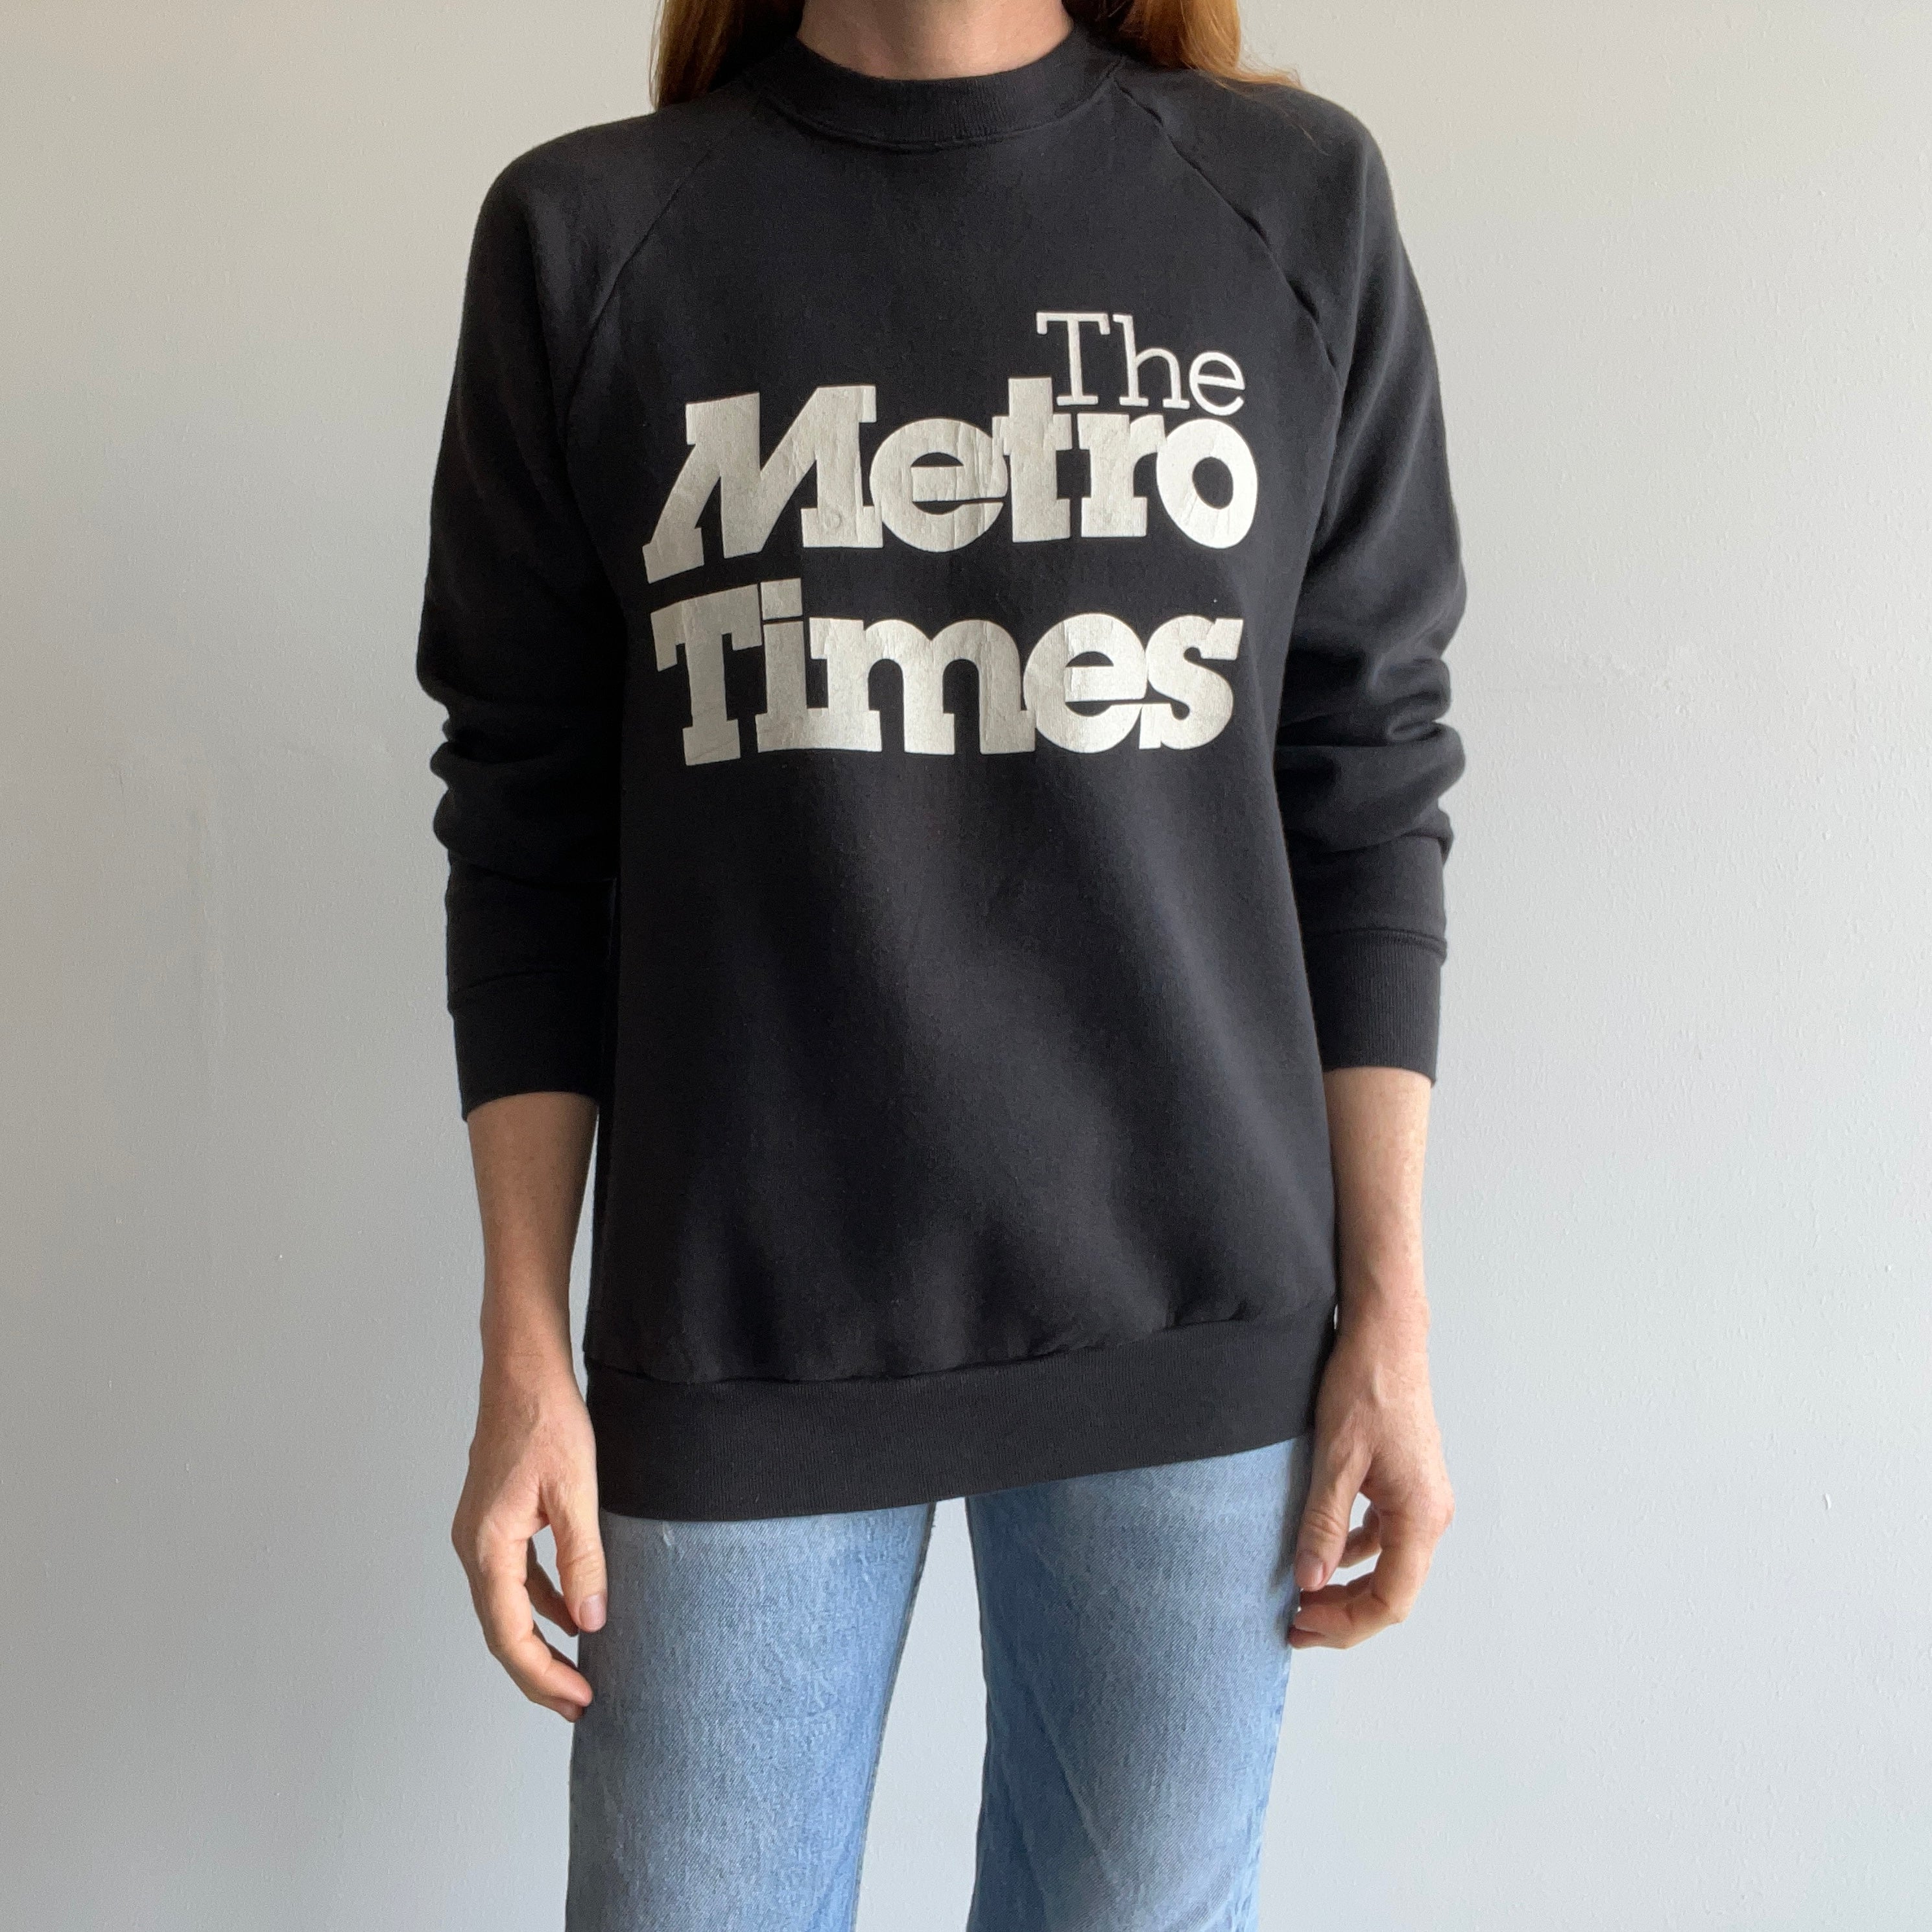 1980s The Metro Times Sweatshirt by FOTL